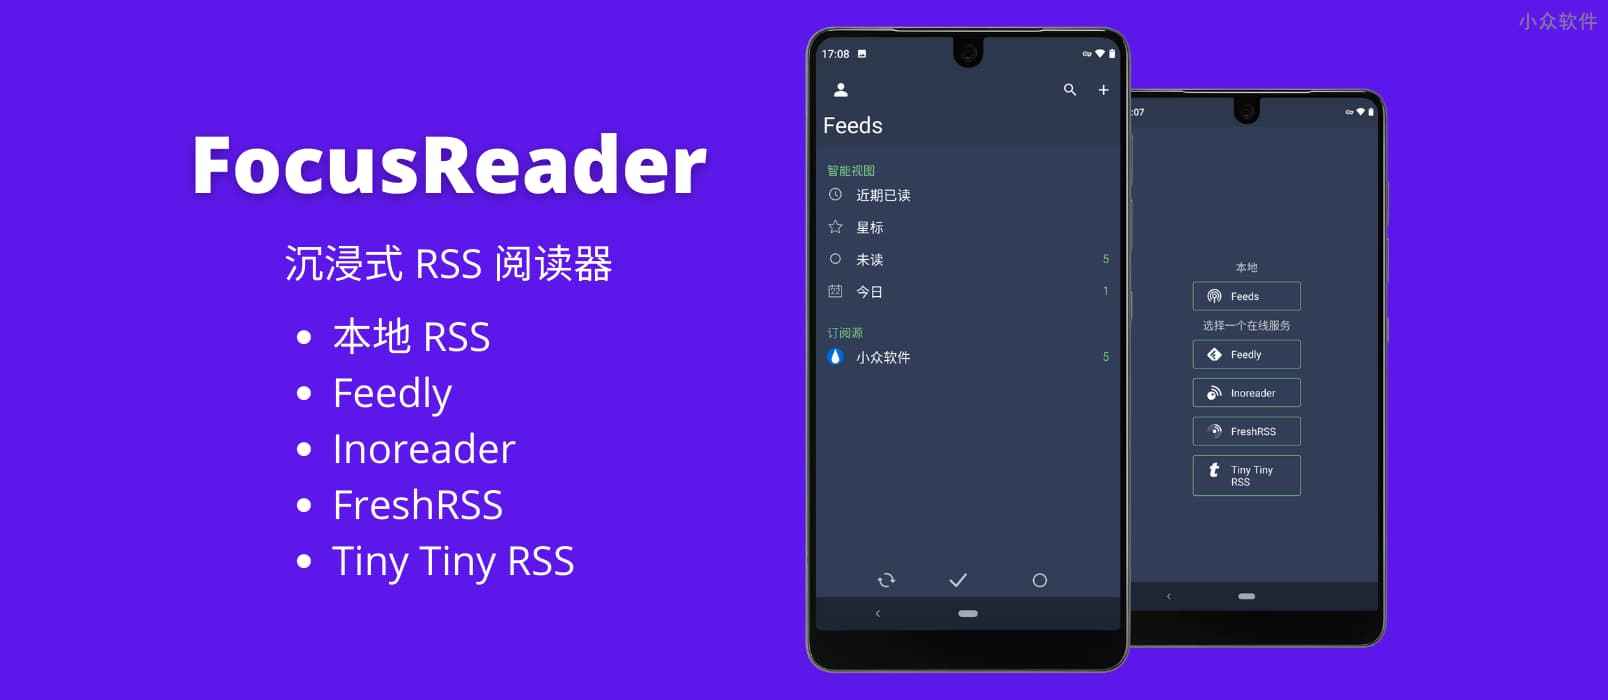 FocusReader 已支持本地 RSS、Feedly 等 5 种订阅源，沉浸式 RSS 阅读器[Android]